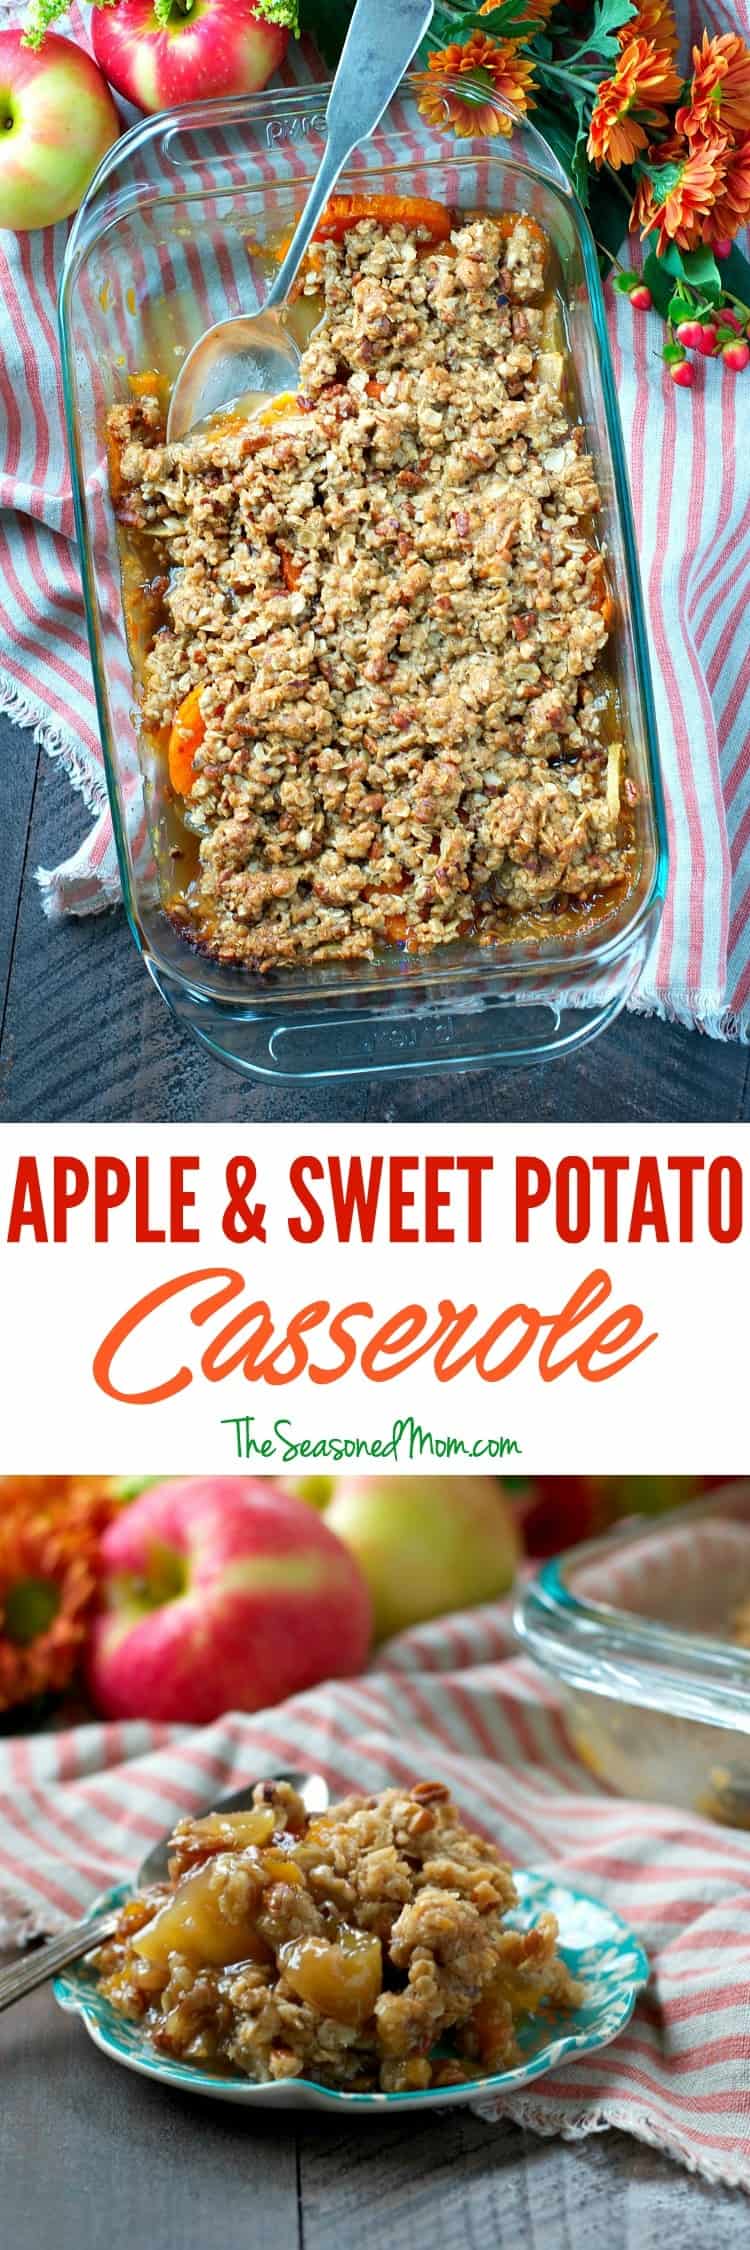 Apple and sweet potato casserole